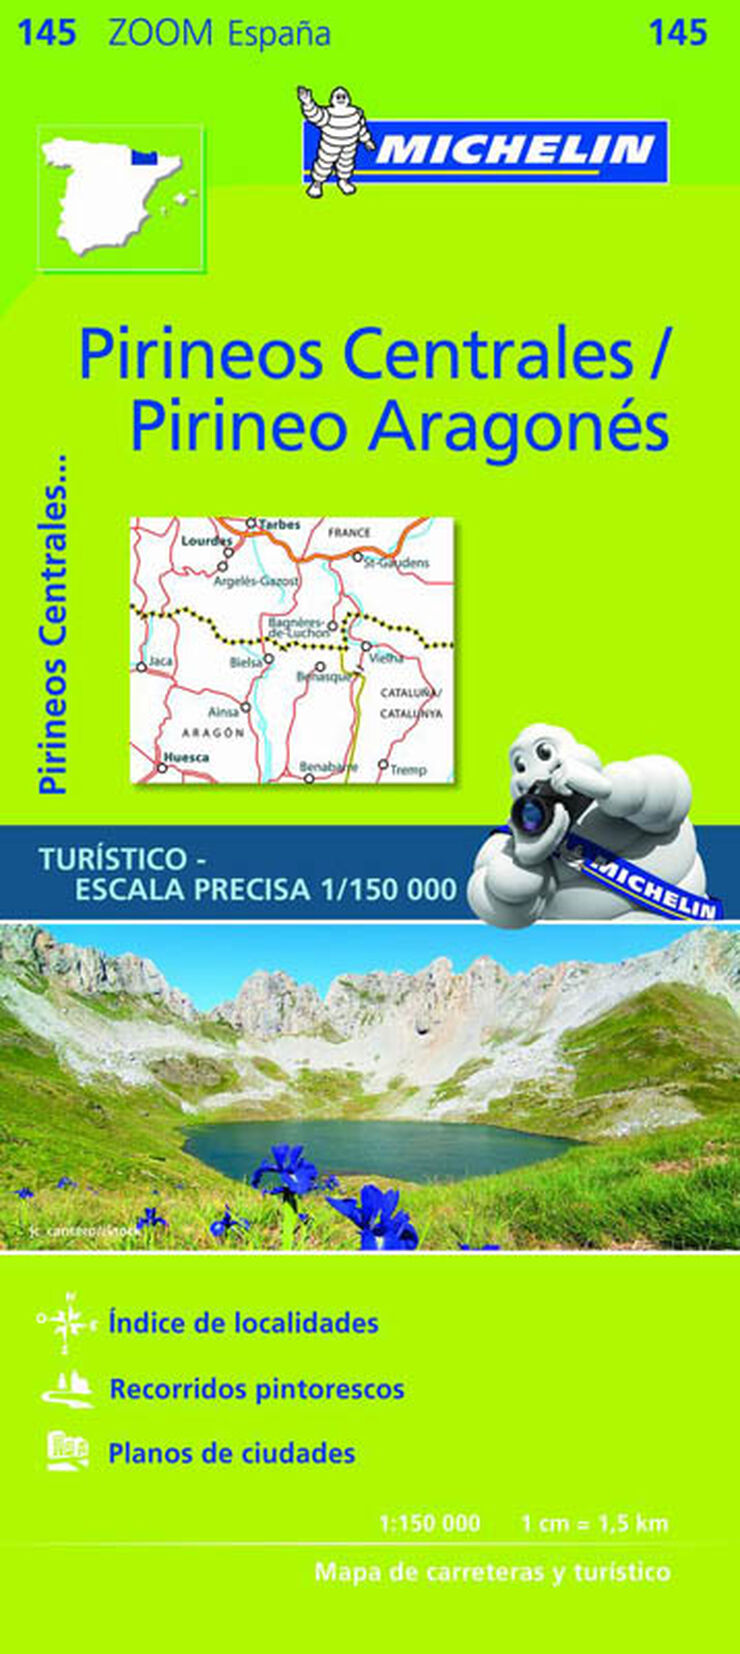 Pirineos Centrales / Pirineo Aragonés